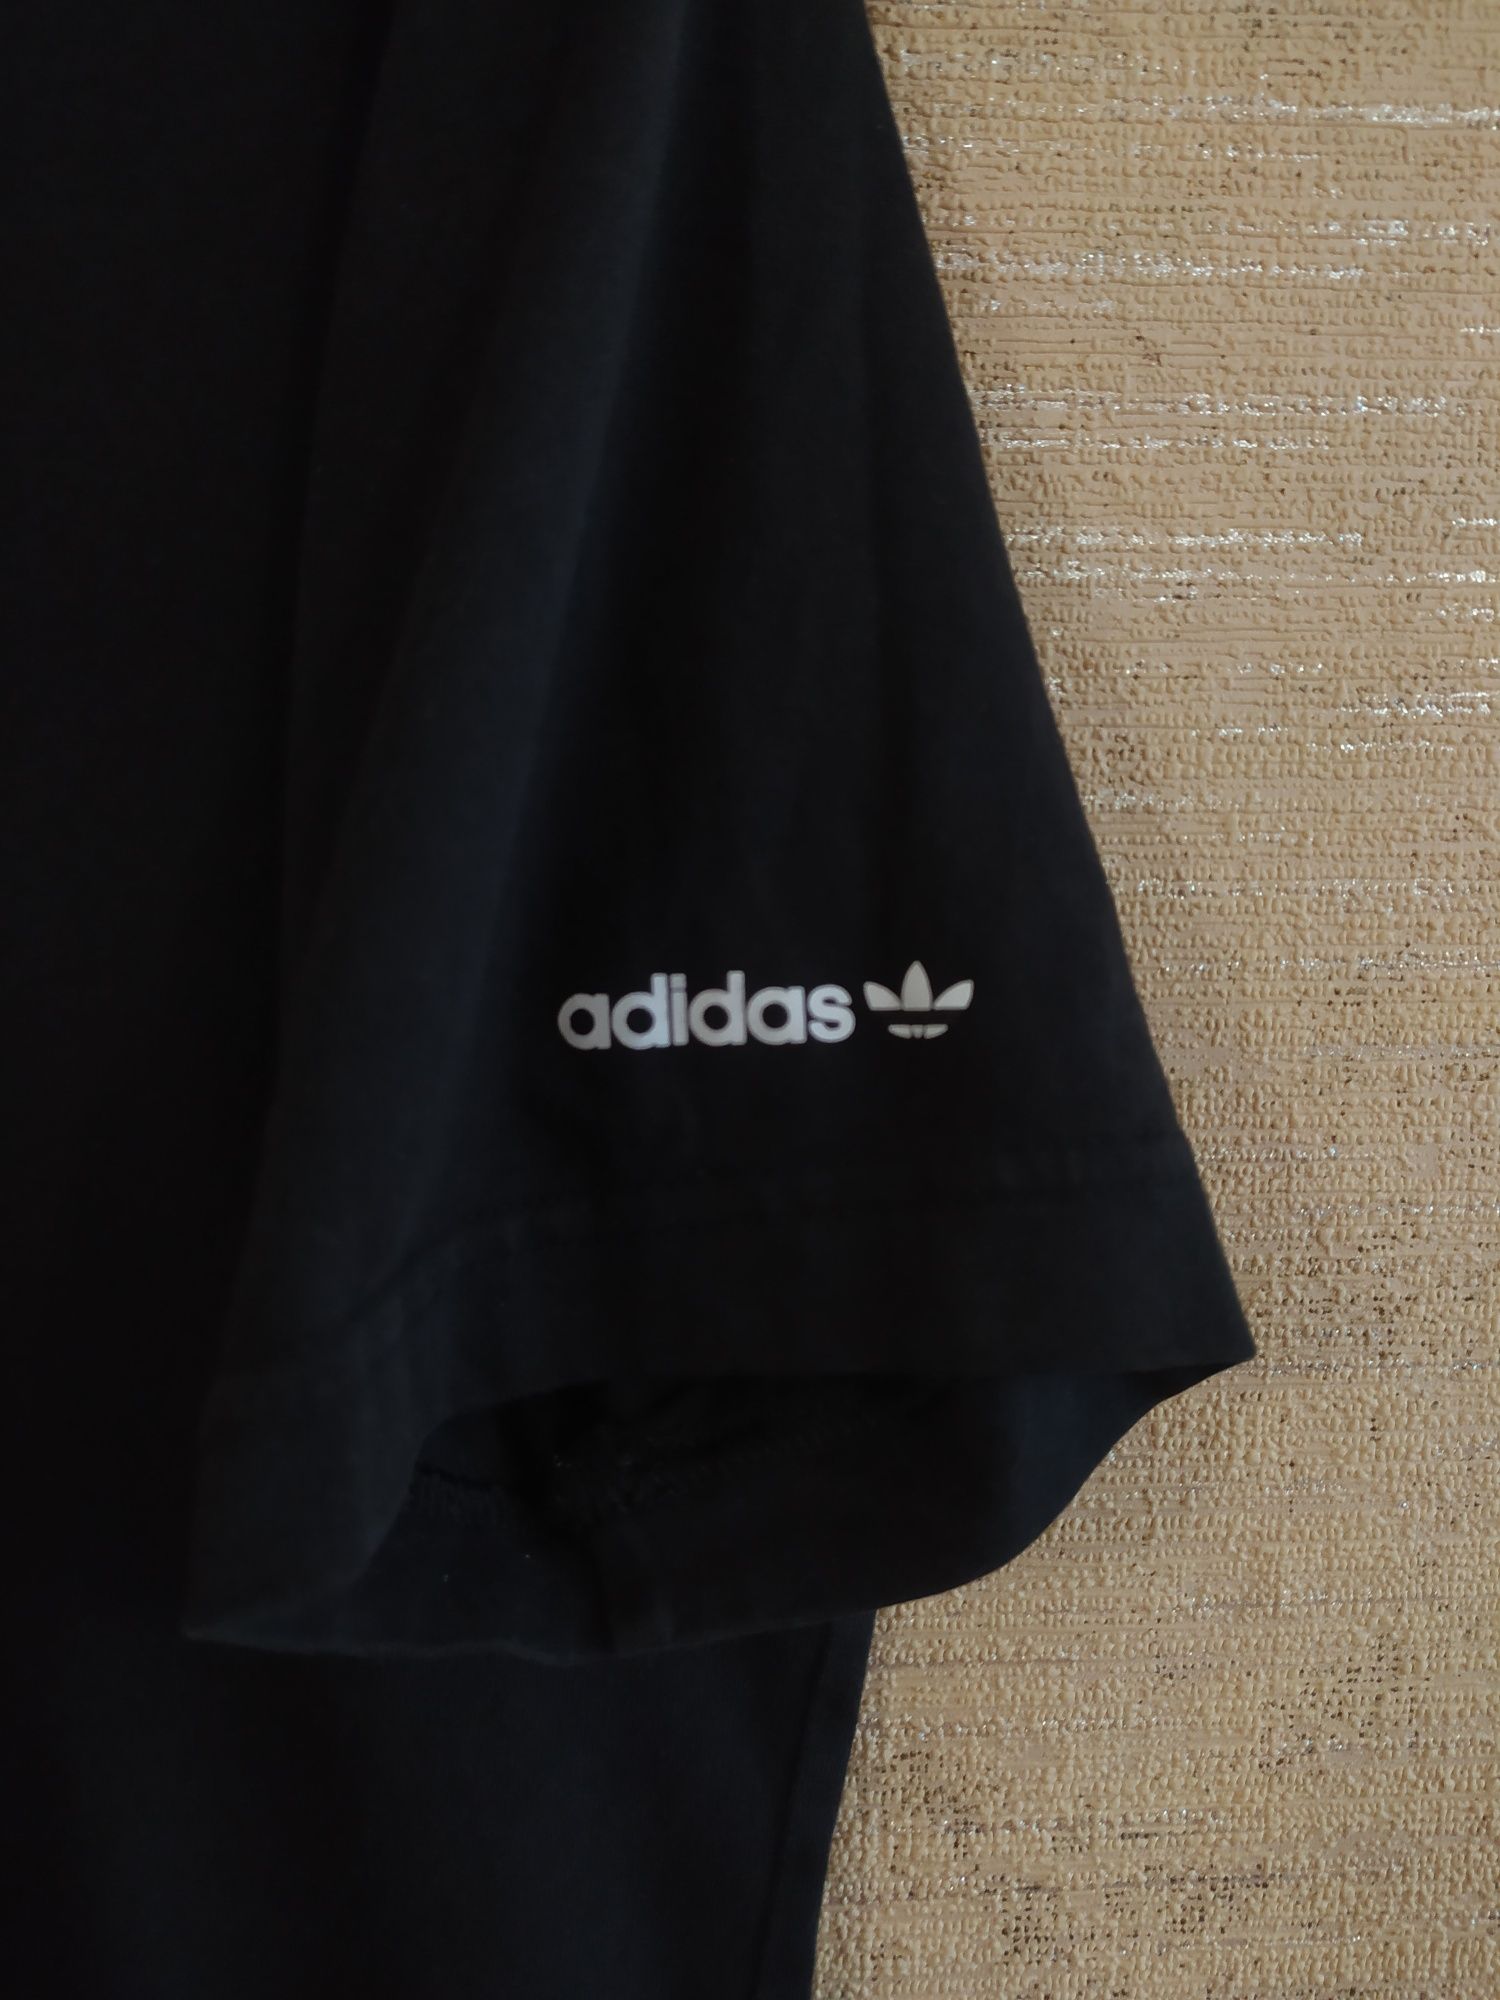 Adidas originals t-shirt, футболка Адидас